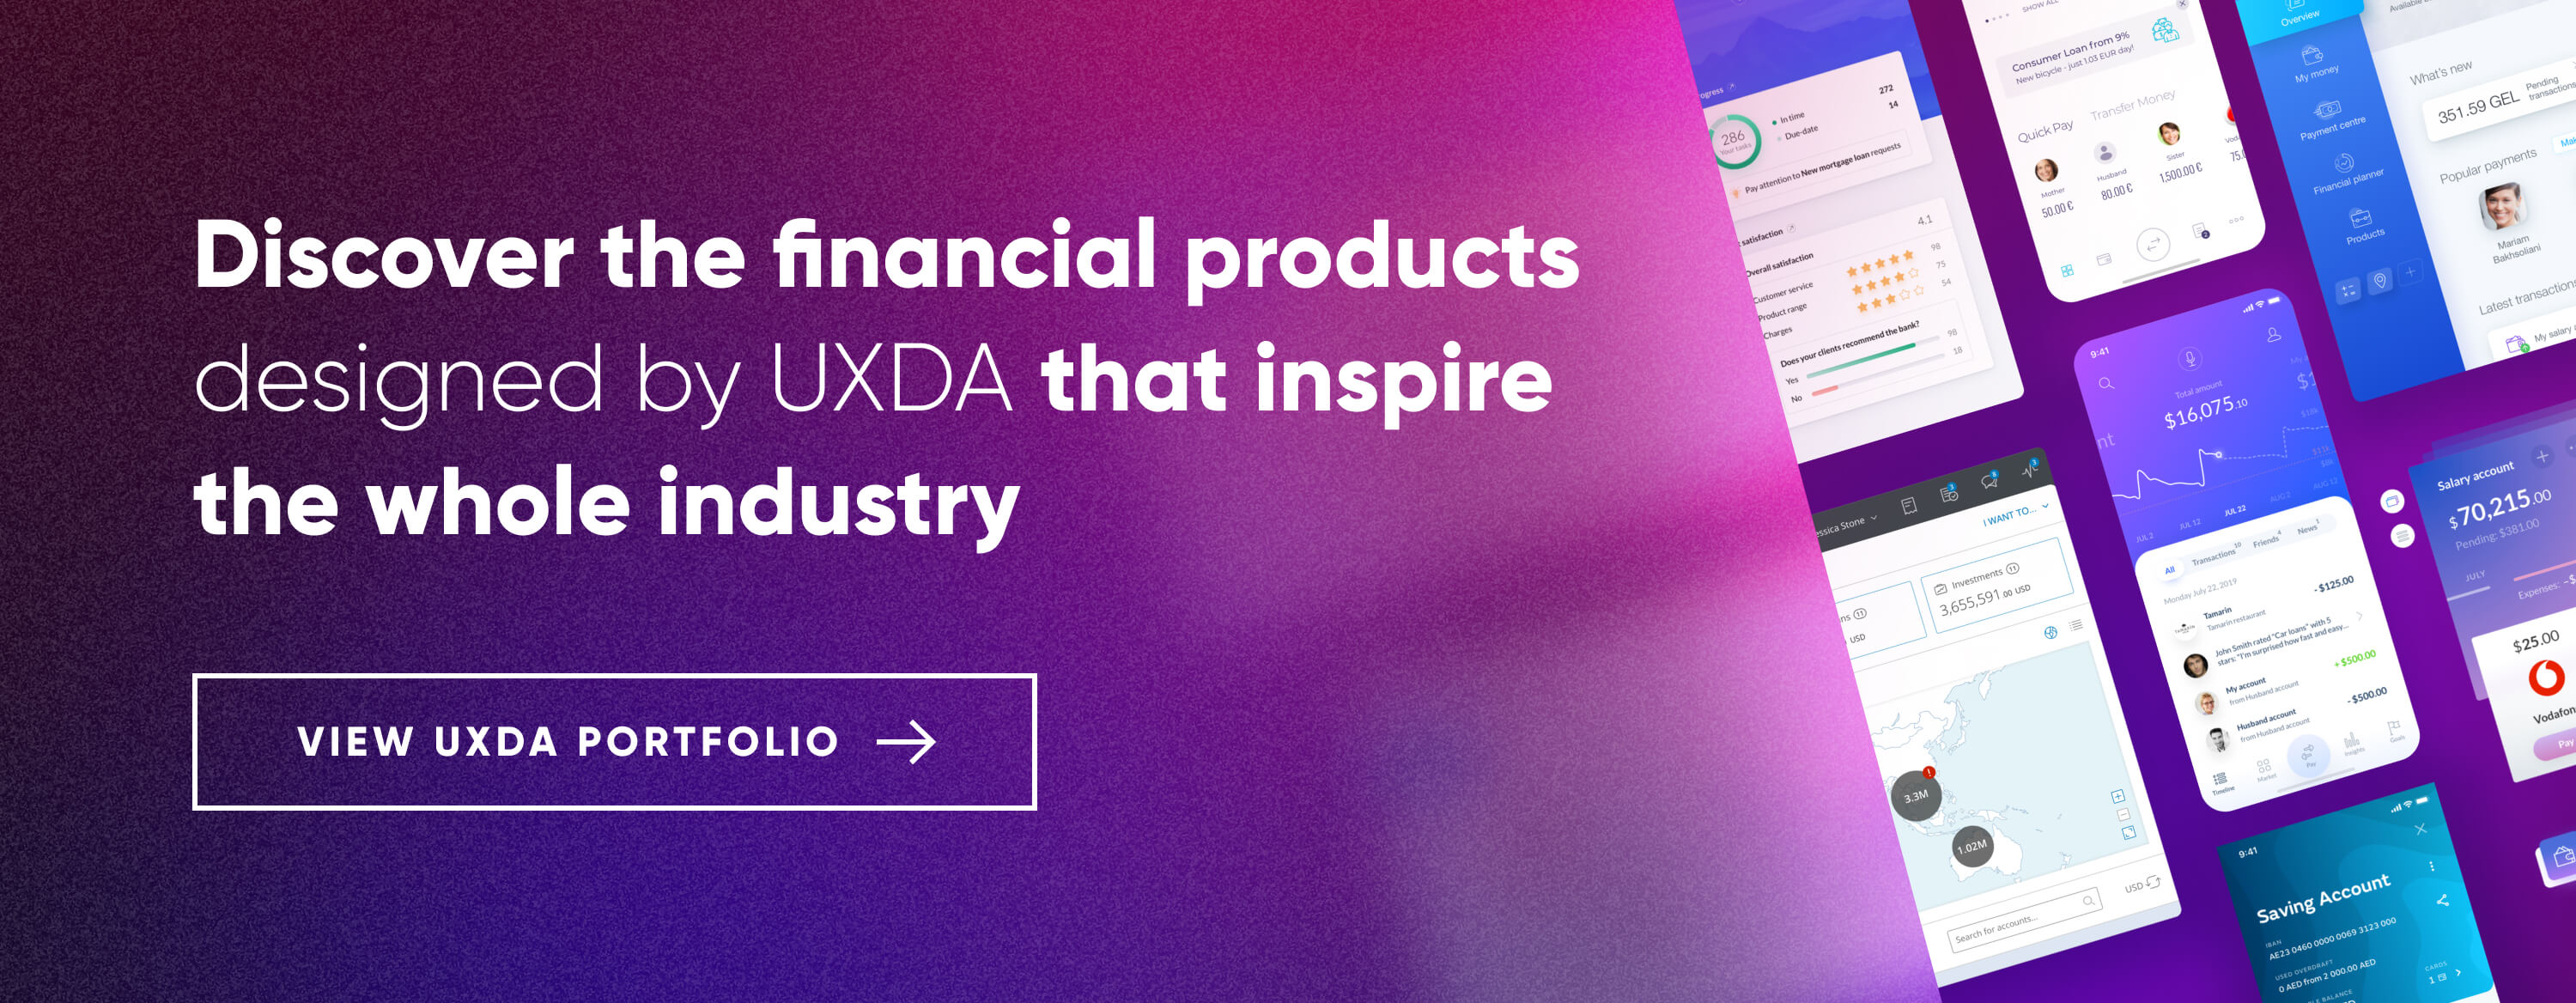 Uxda portfolio financial digital product inspire industry ux